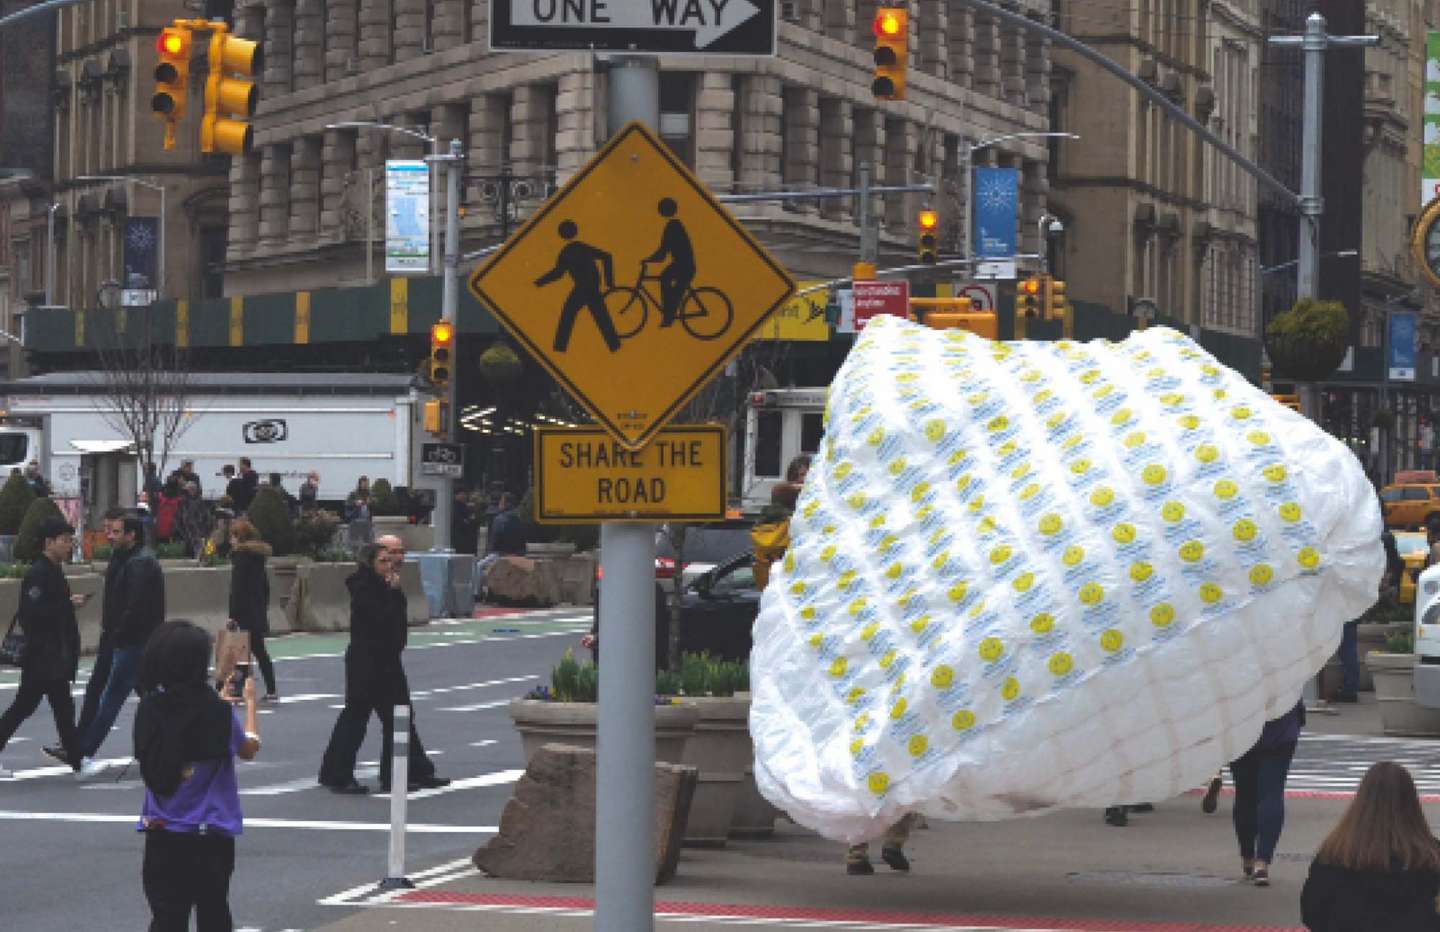 The World's Biggest Giant Plastic Bag